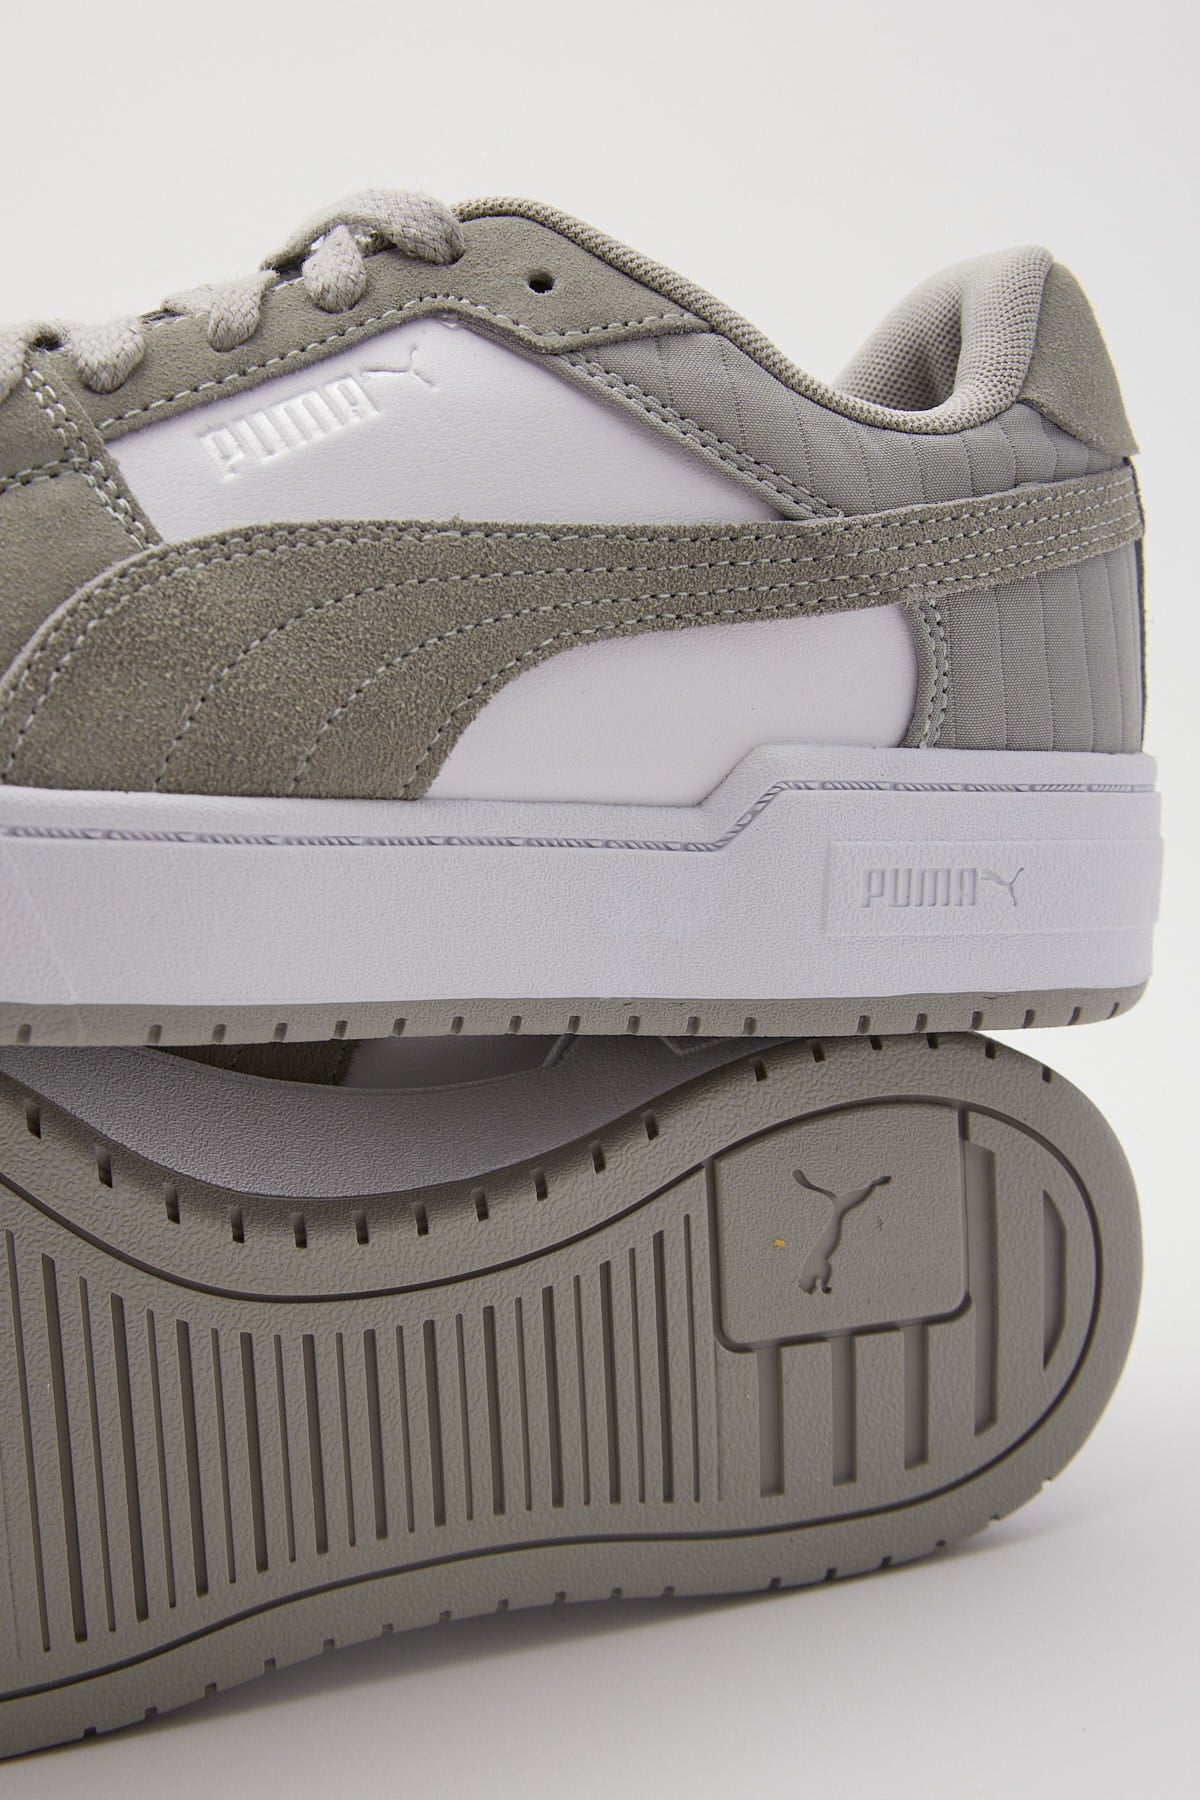 Puma CA Pro Quilt White/Grey